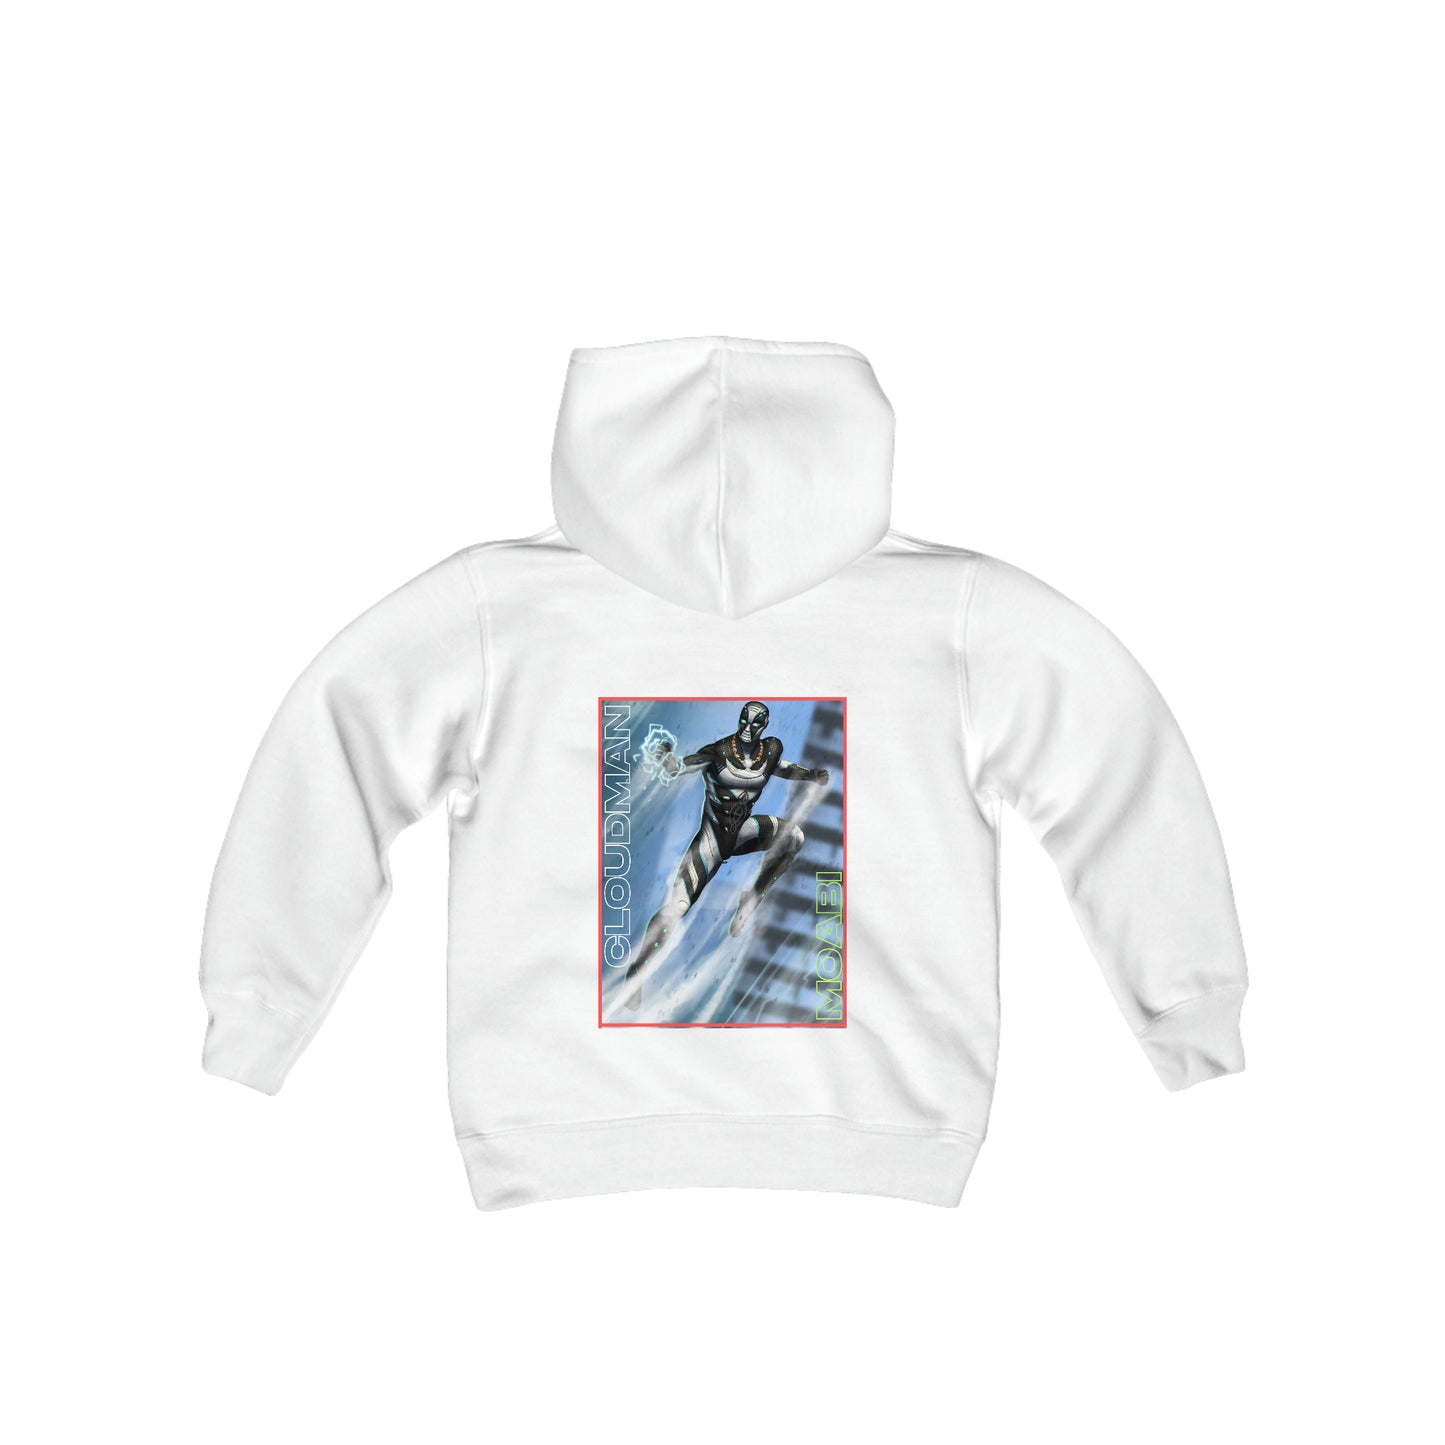 Cloudman  - Girls - Heavy Blend Hooded Sweatshirt  -  Front & Back designs